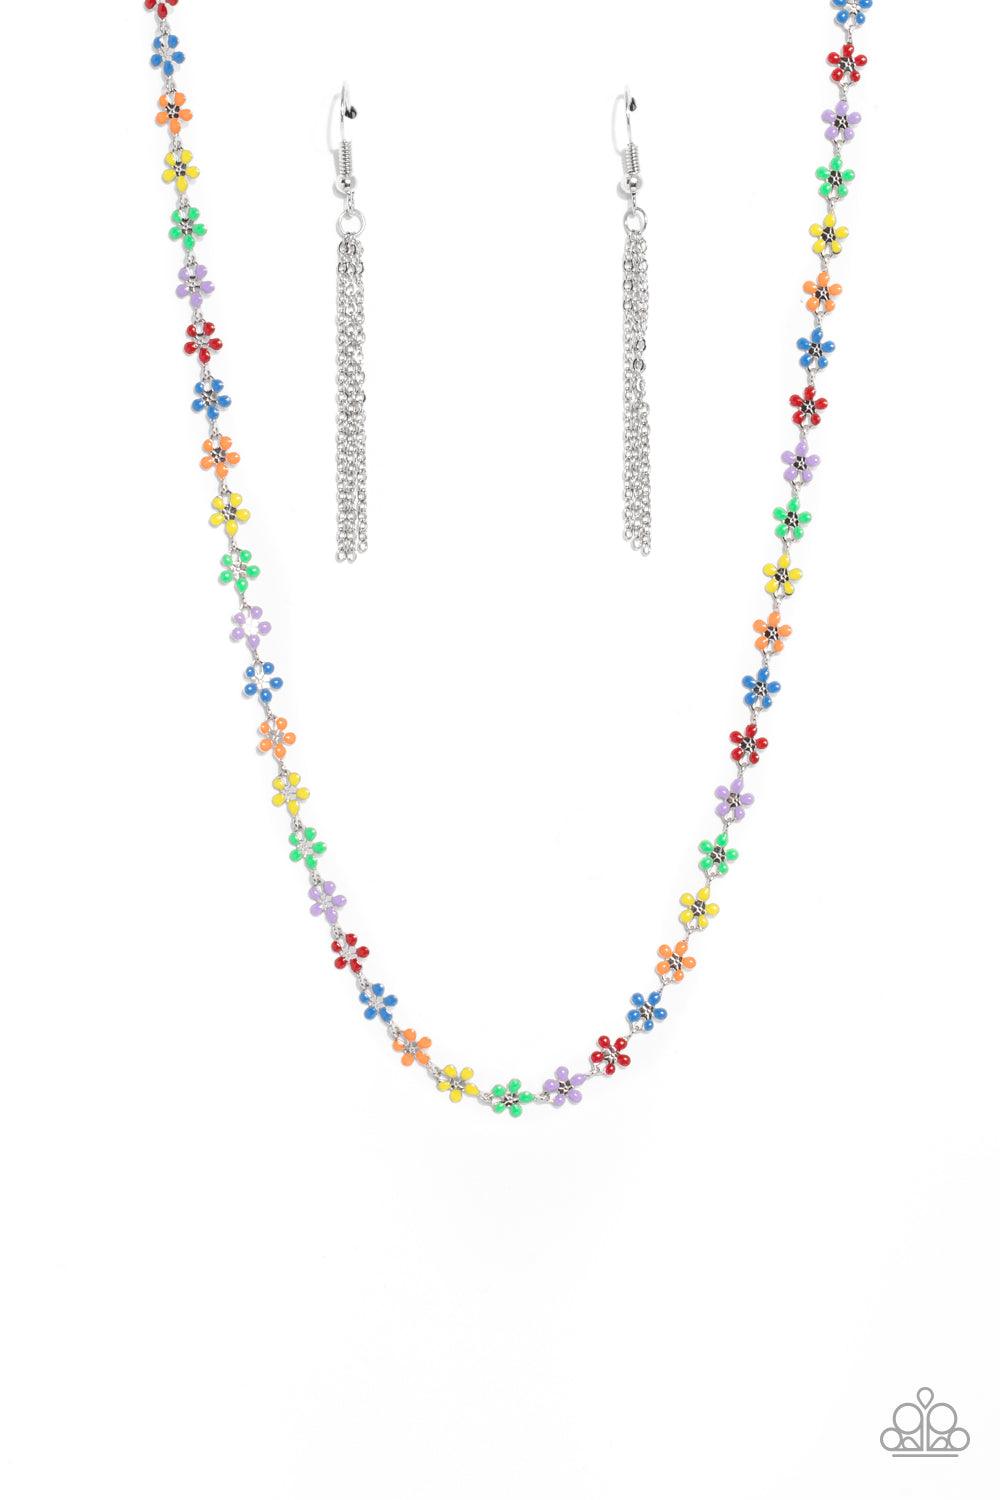 Paparazzi Accessories - Floral Catwalk - Multicolor Choker Necklace - Bling by JessieK